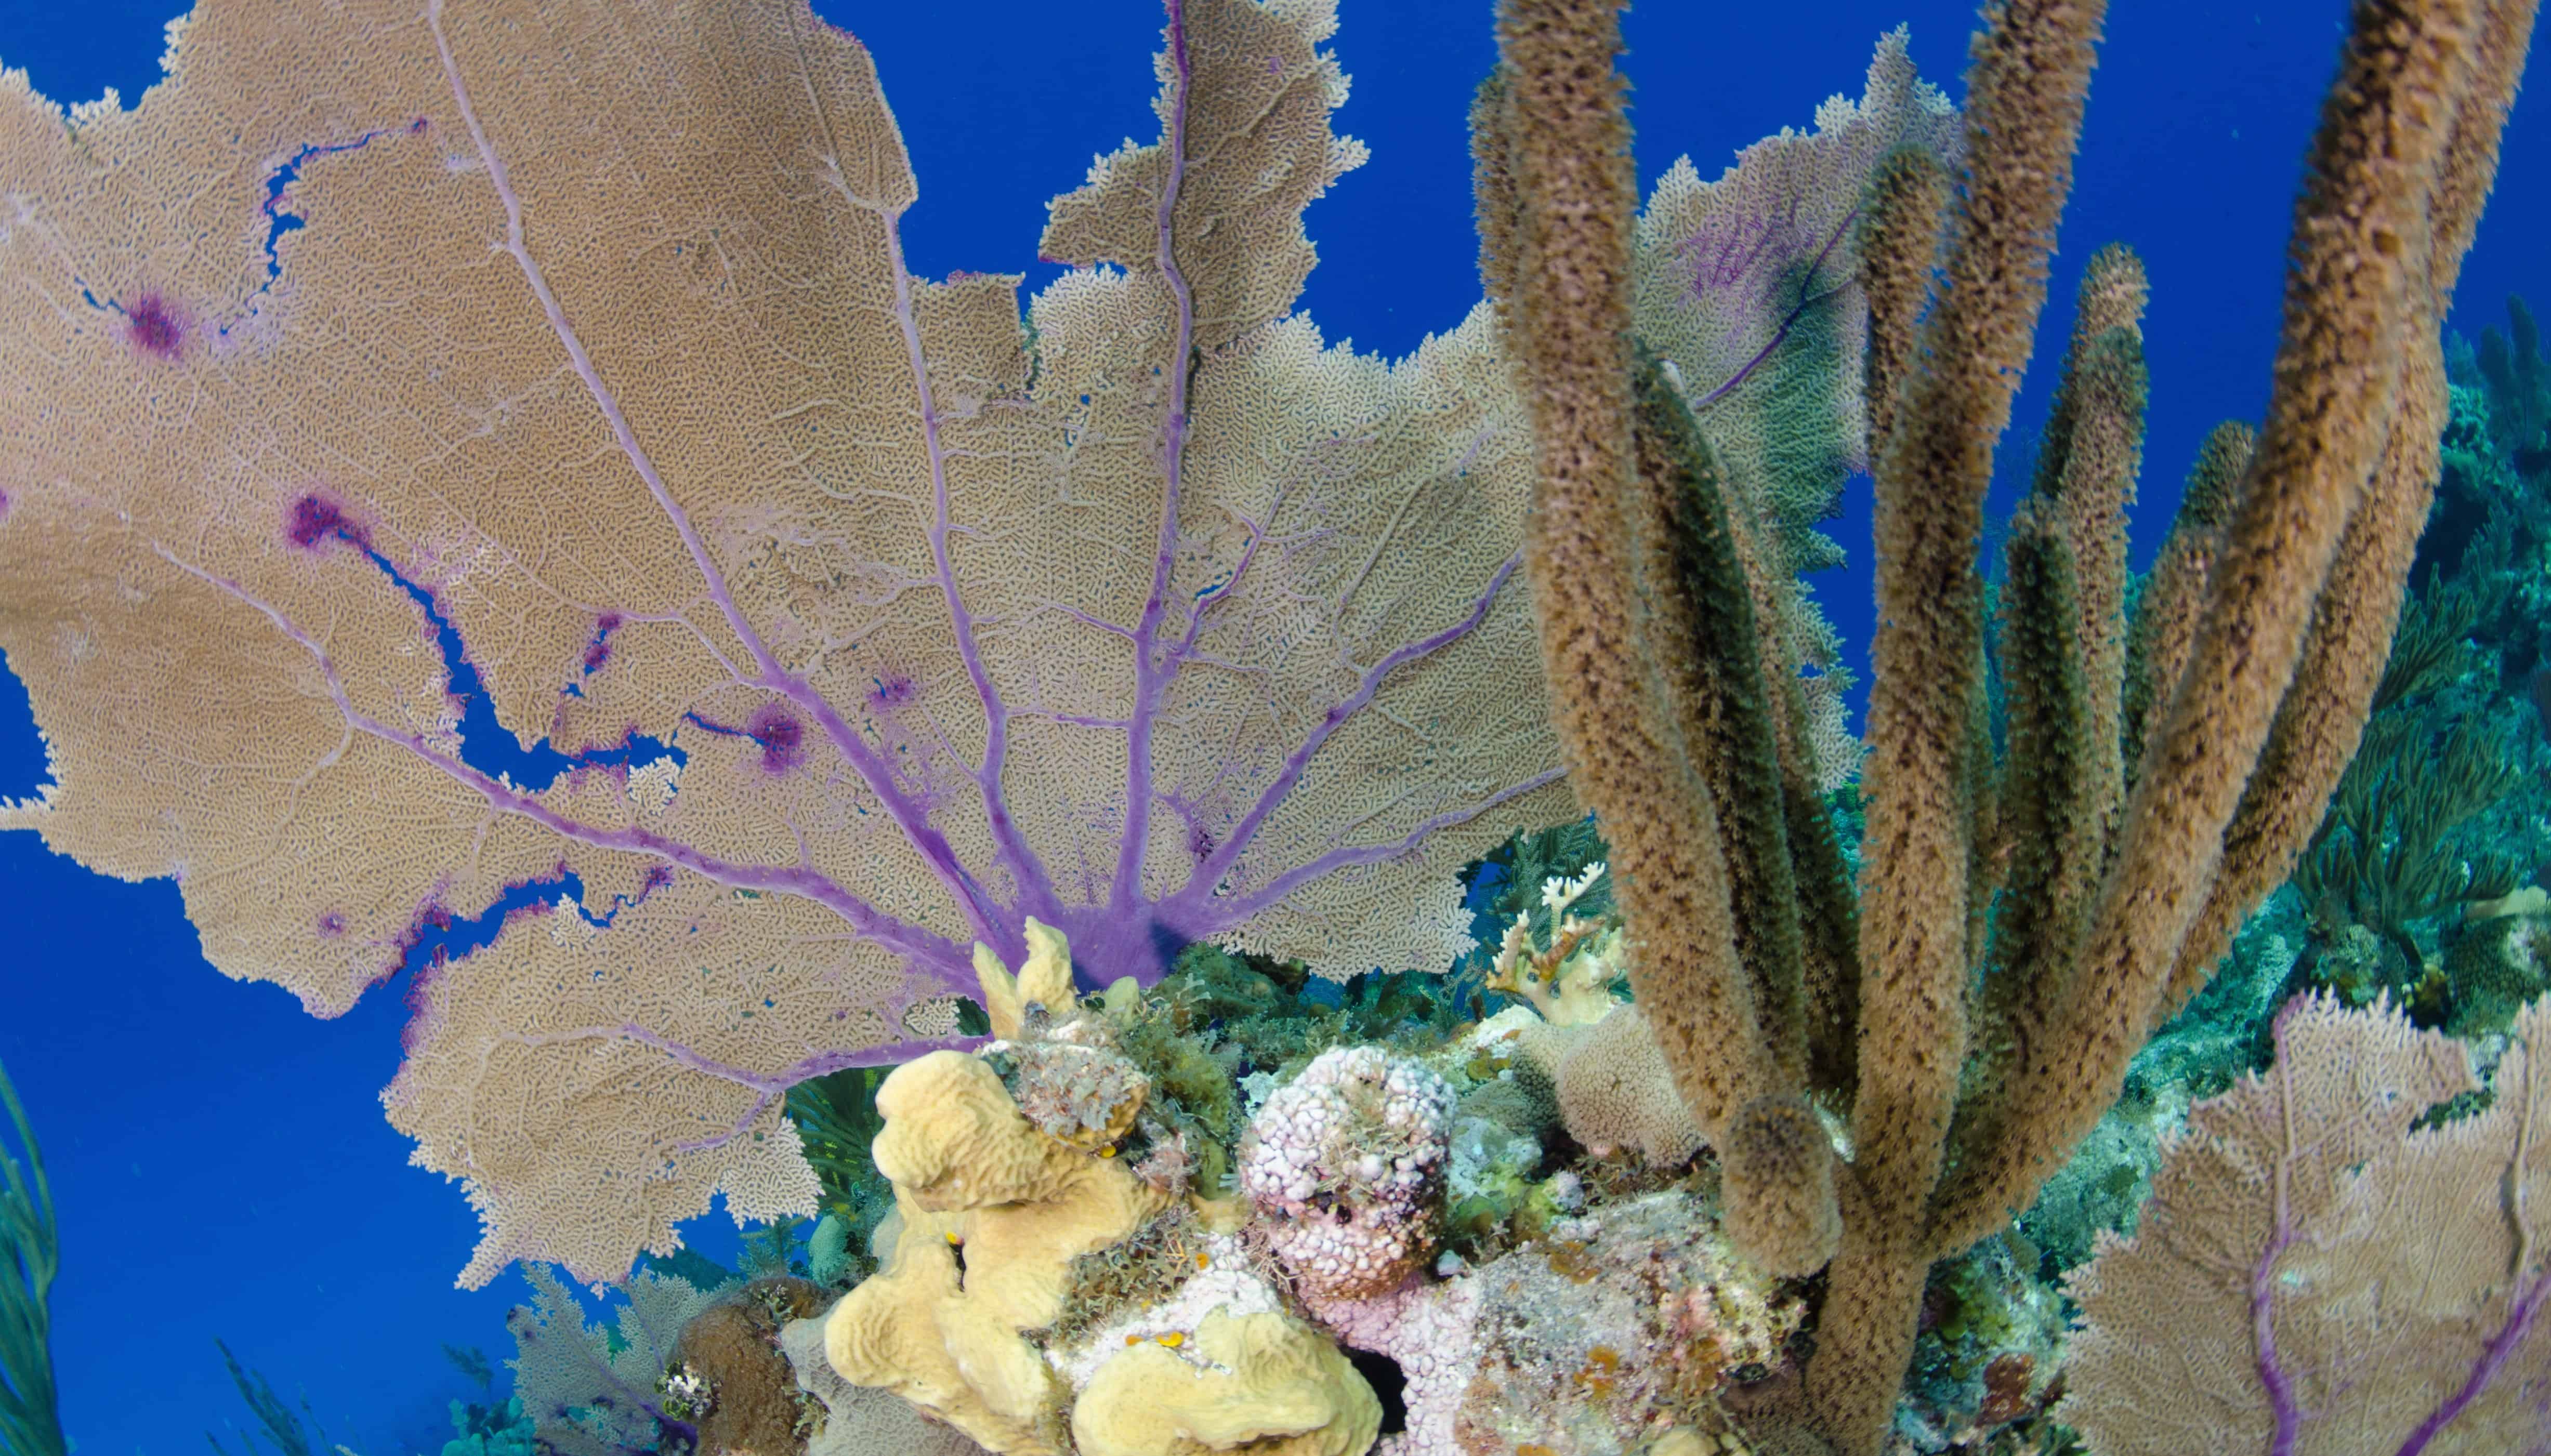 A purple sea fan Gorgonia ventalina with a lettuce coral Undaria agaricites underneath it and a porous sea rod Pseudoplexaura spp; Copyright: Diana Schmitt/CCMI